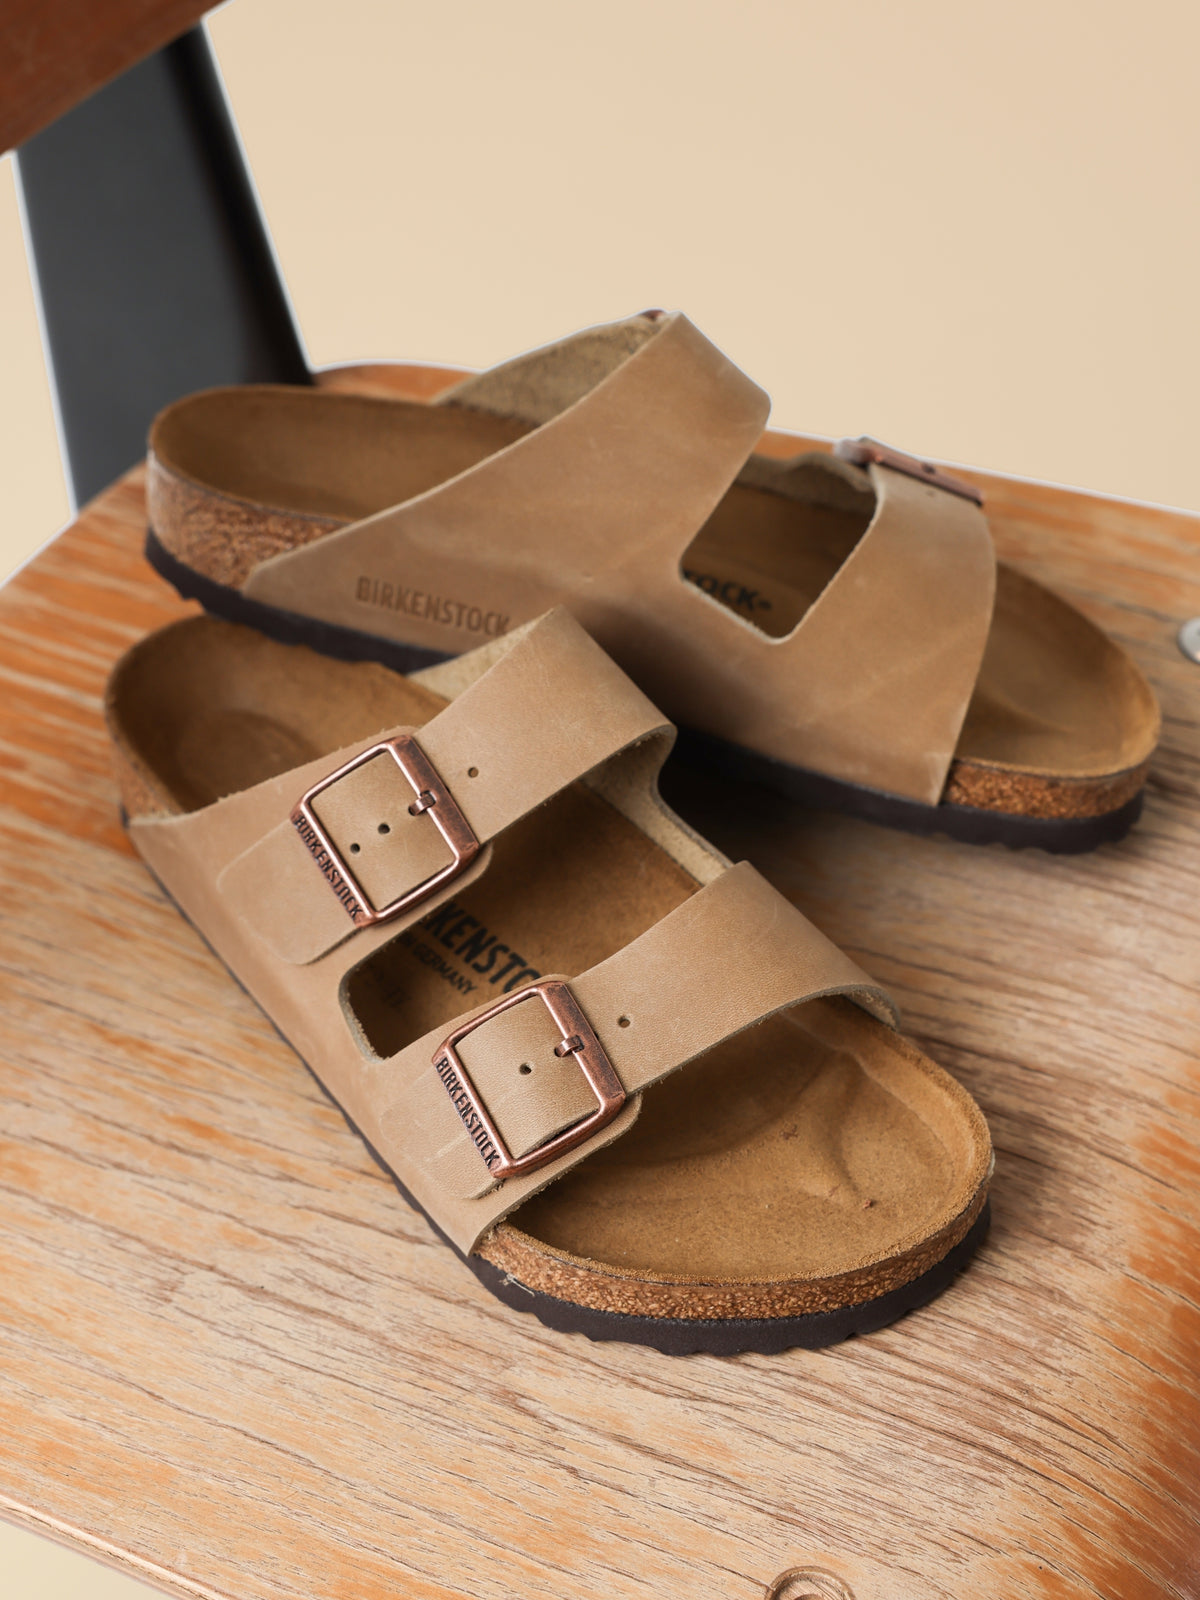 Unisex Arizona Two-Strap Regular Sandals in Tobacco Brown Leathe - Glue Store